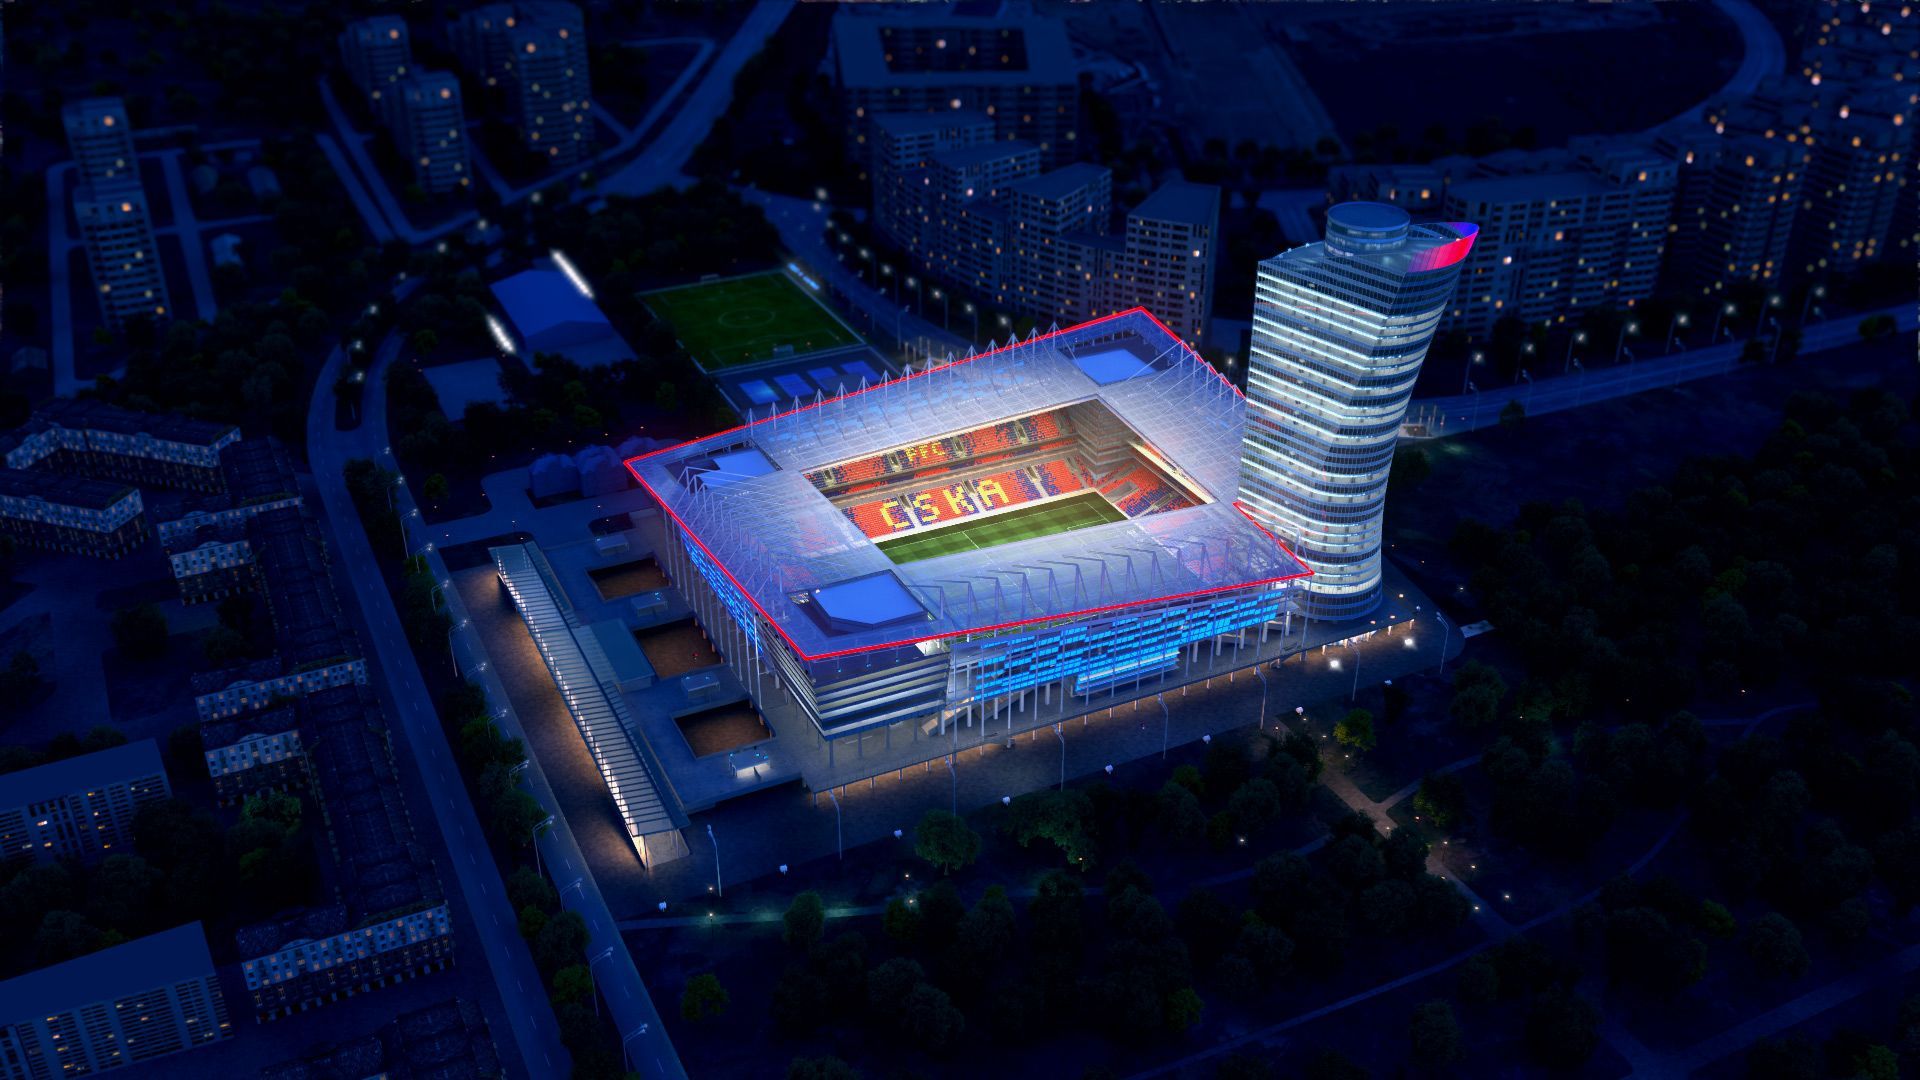 Design: Arena CSKA